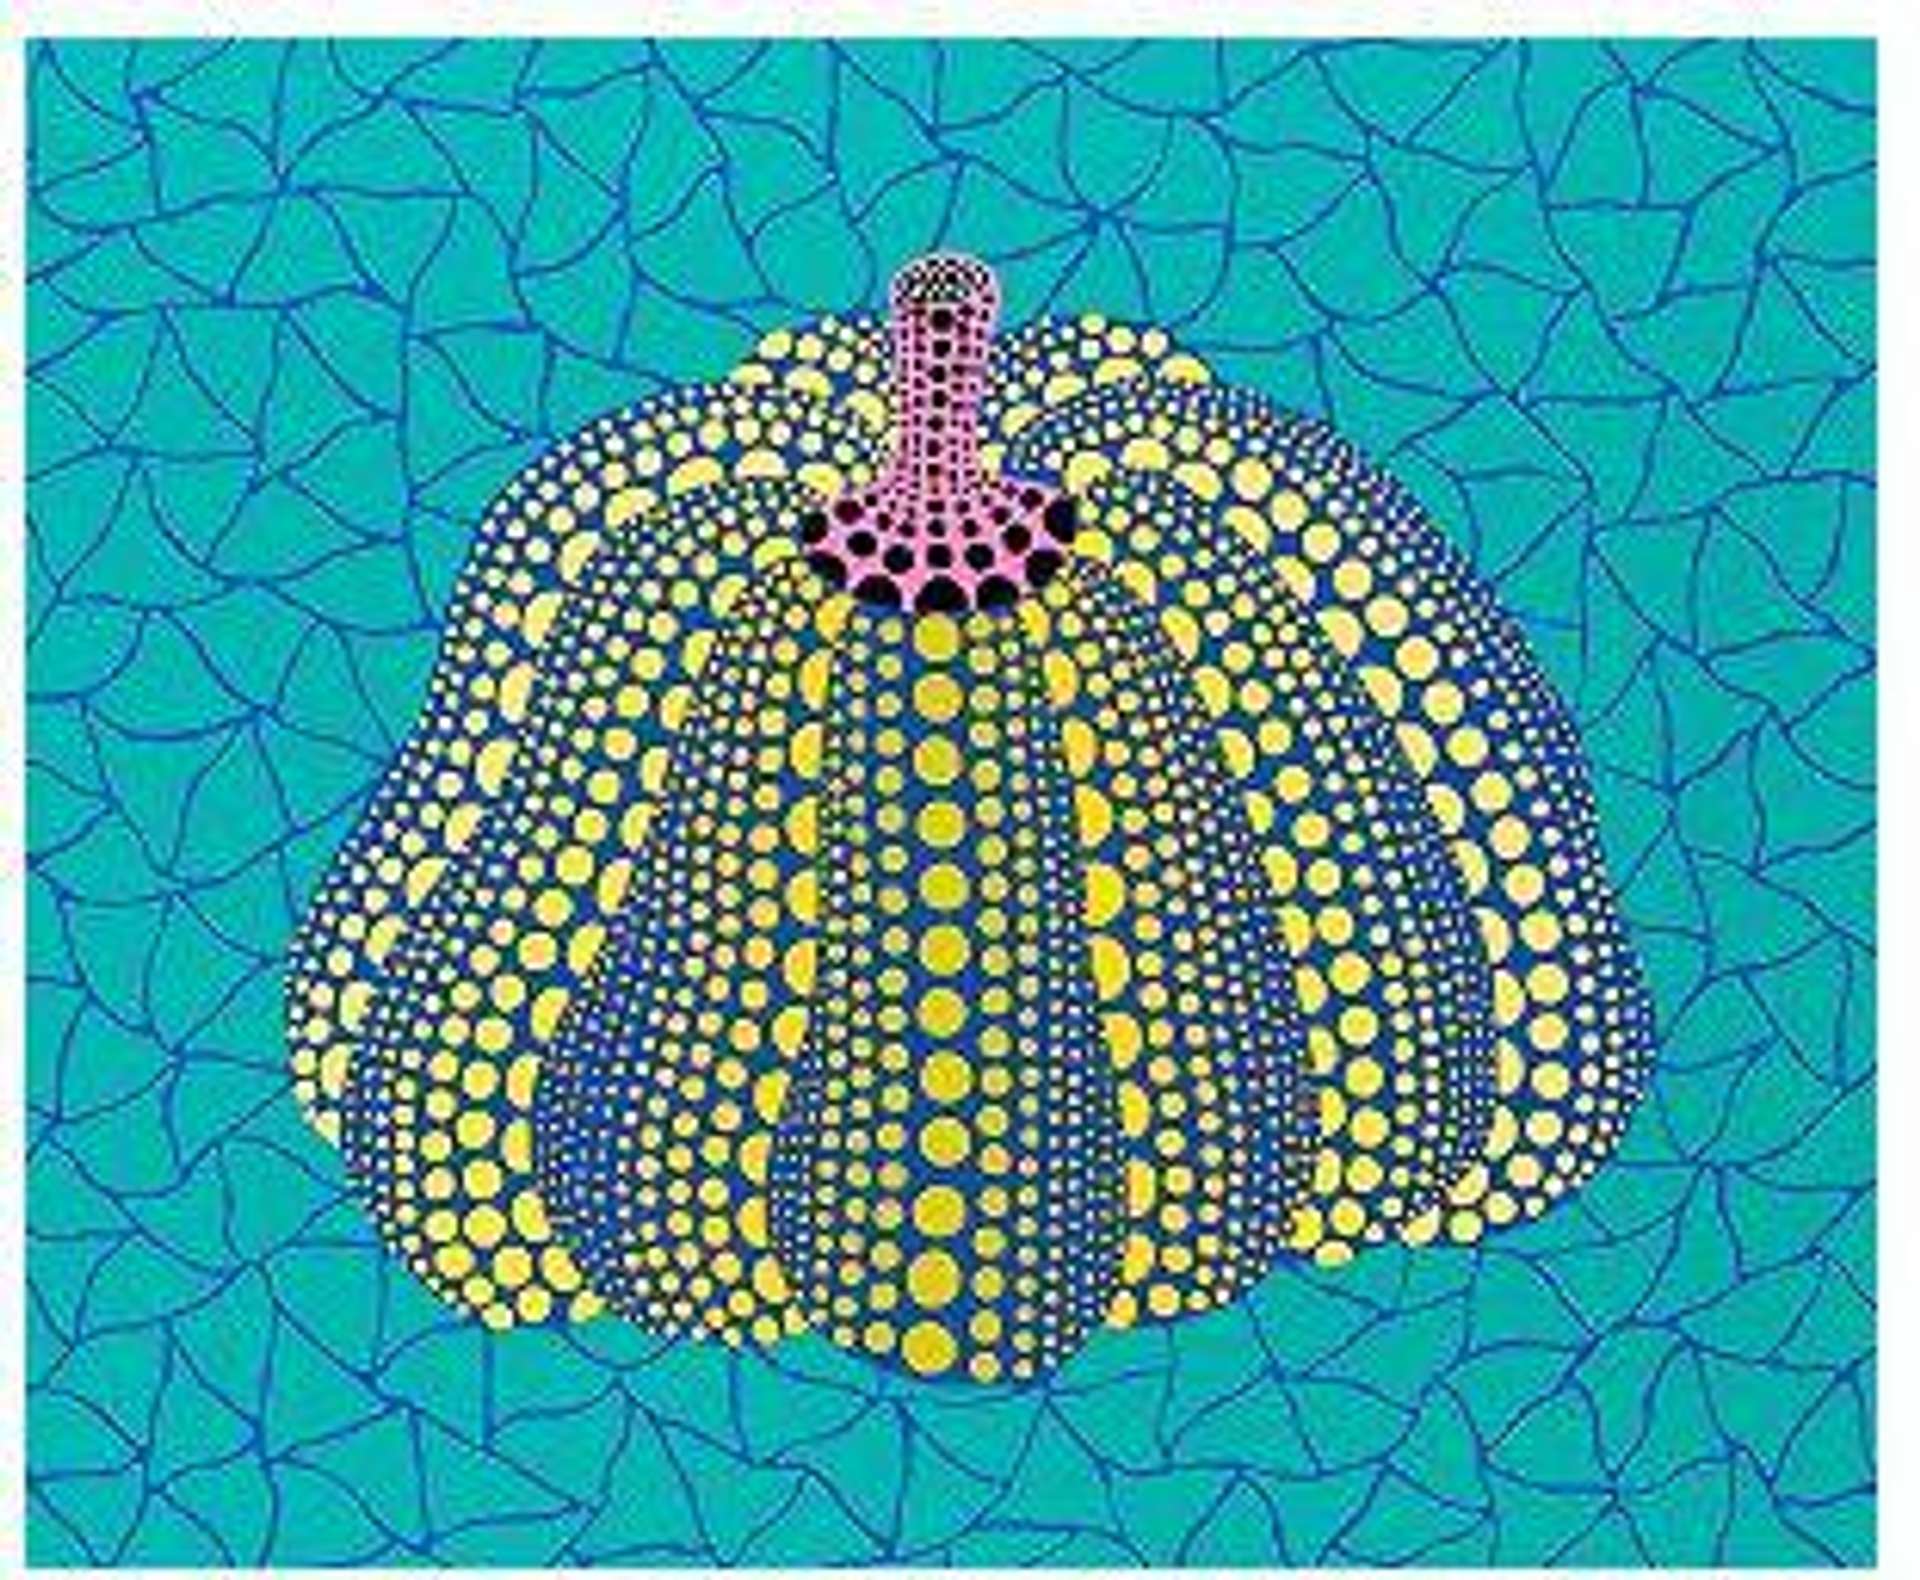 Yayoi Kusama’s Pumpkin (OG) , Kusama 156. A screenprint of a pumpkin made of blue, yellow, pink, and black polka dots against a blue, web-patterned background. 